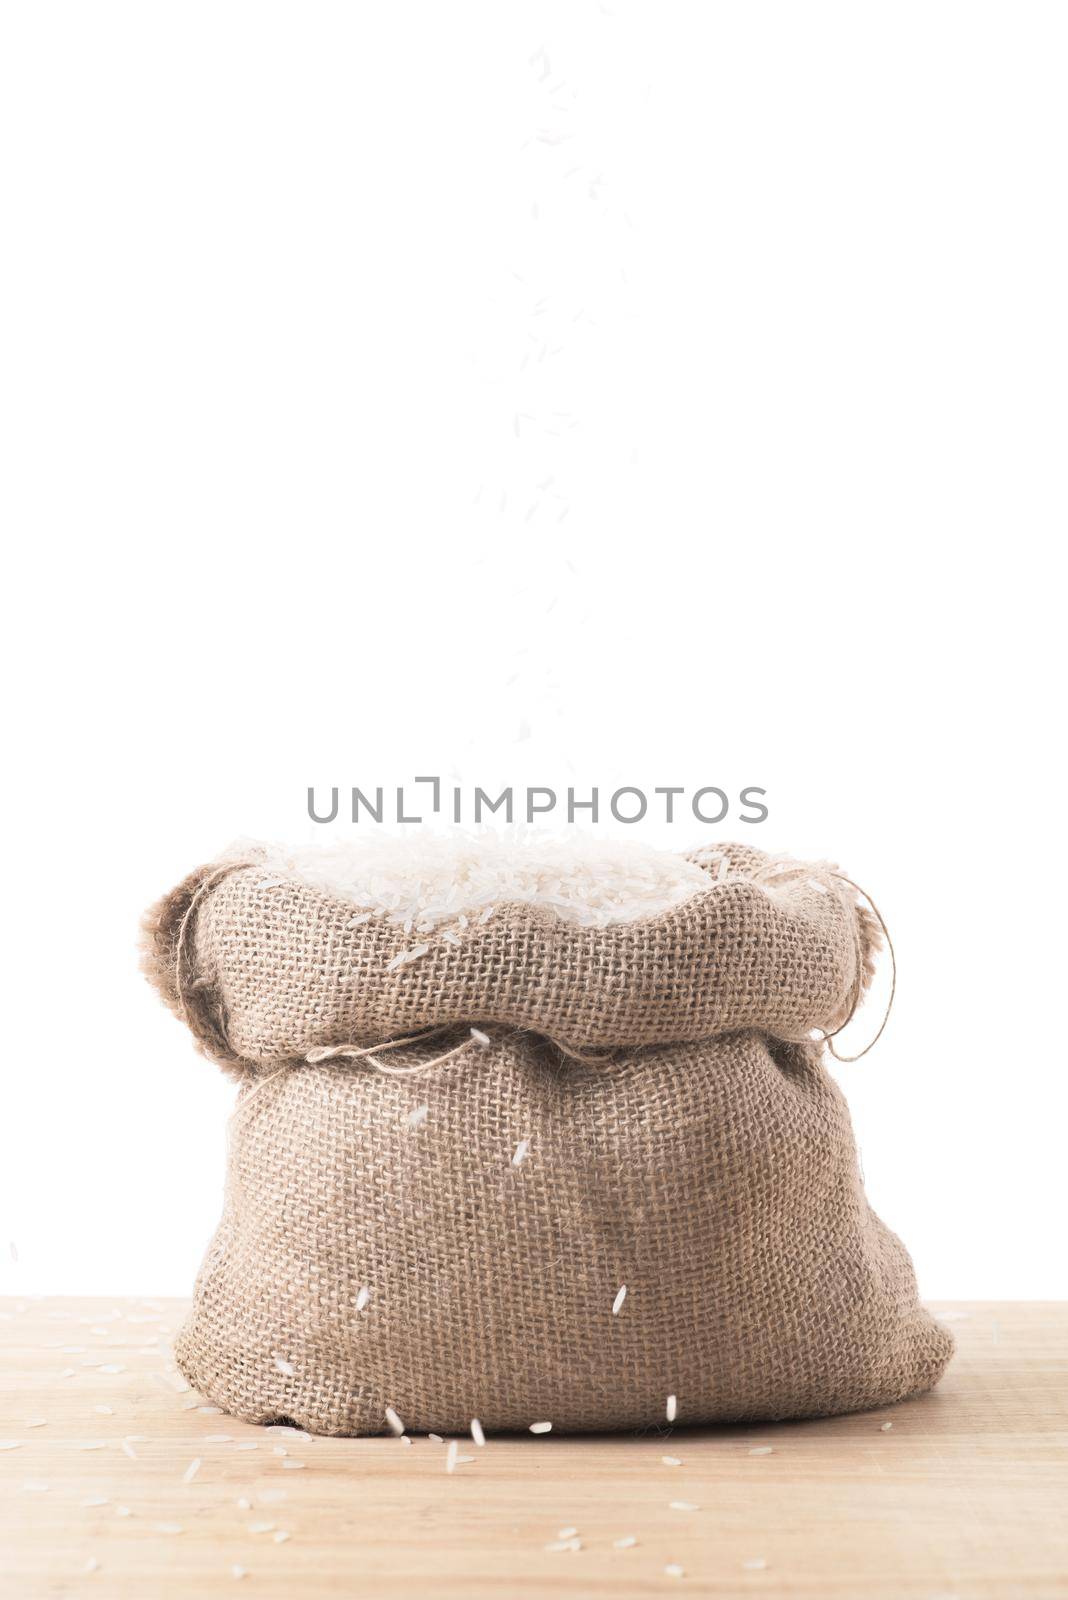 White rice in burlap sack bag isolated on white background